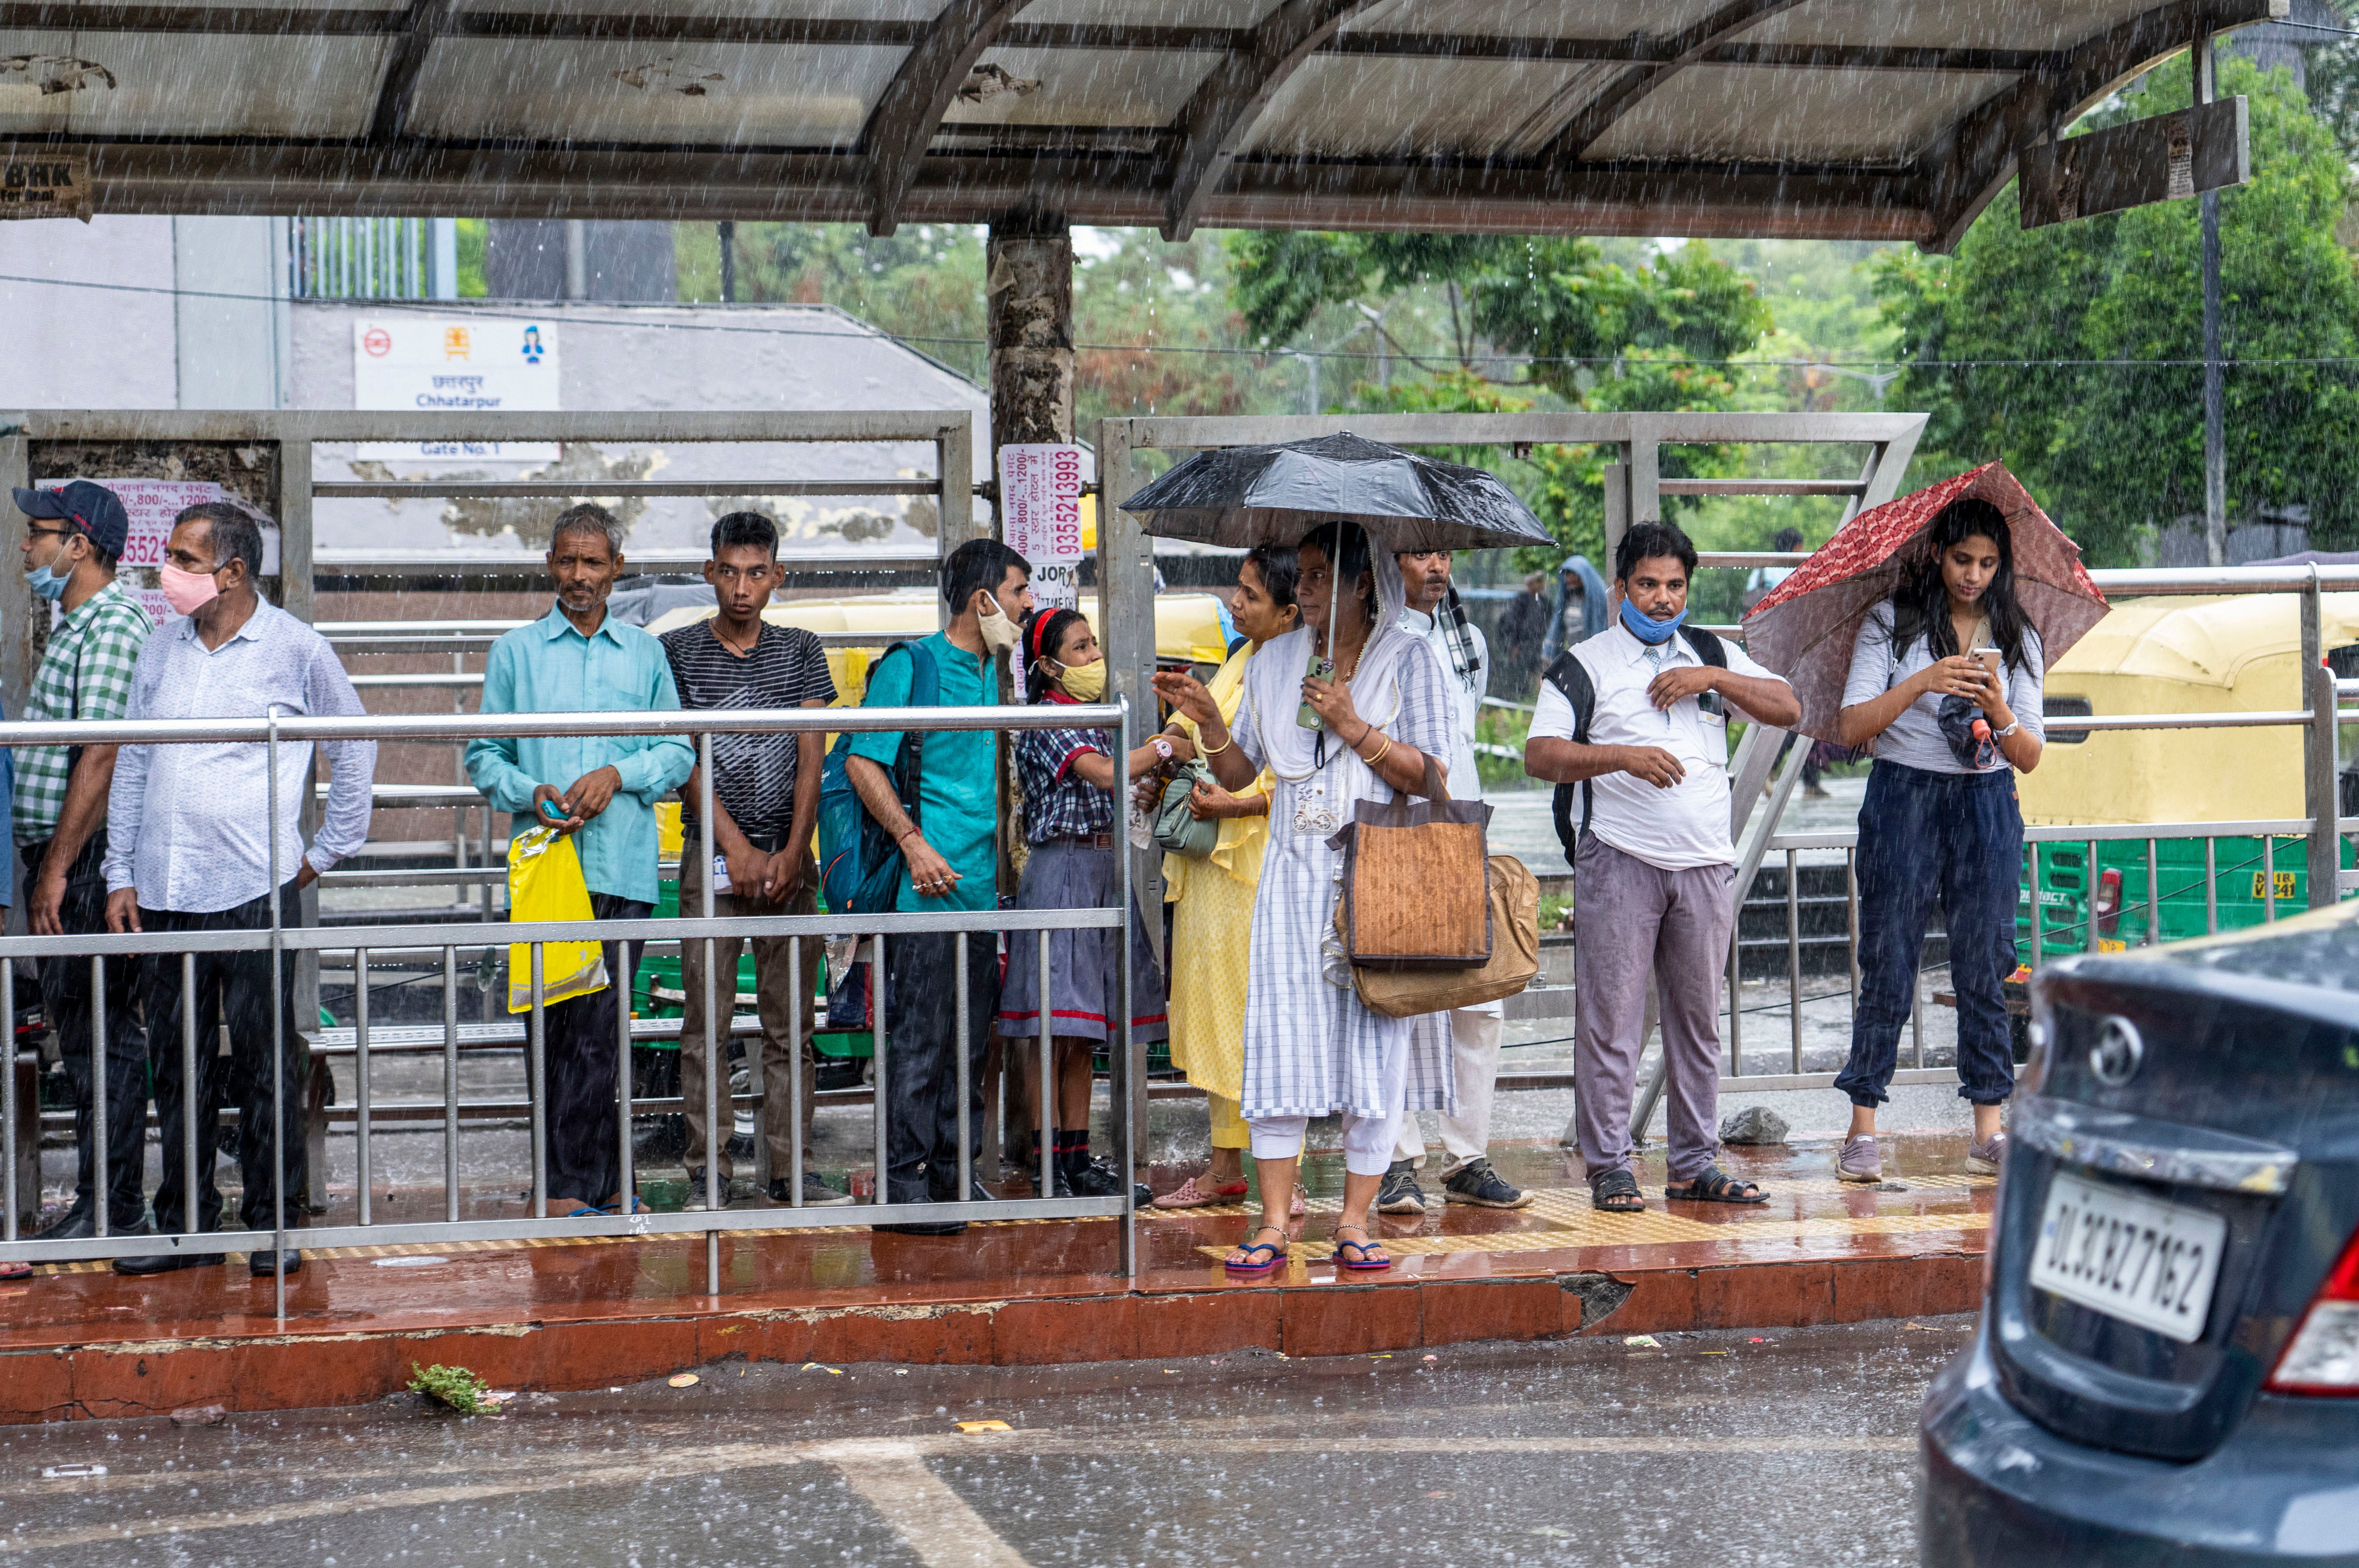 People wait for public transport as it rains in New Delhi